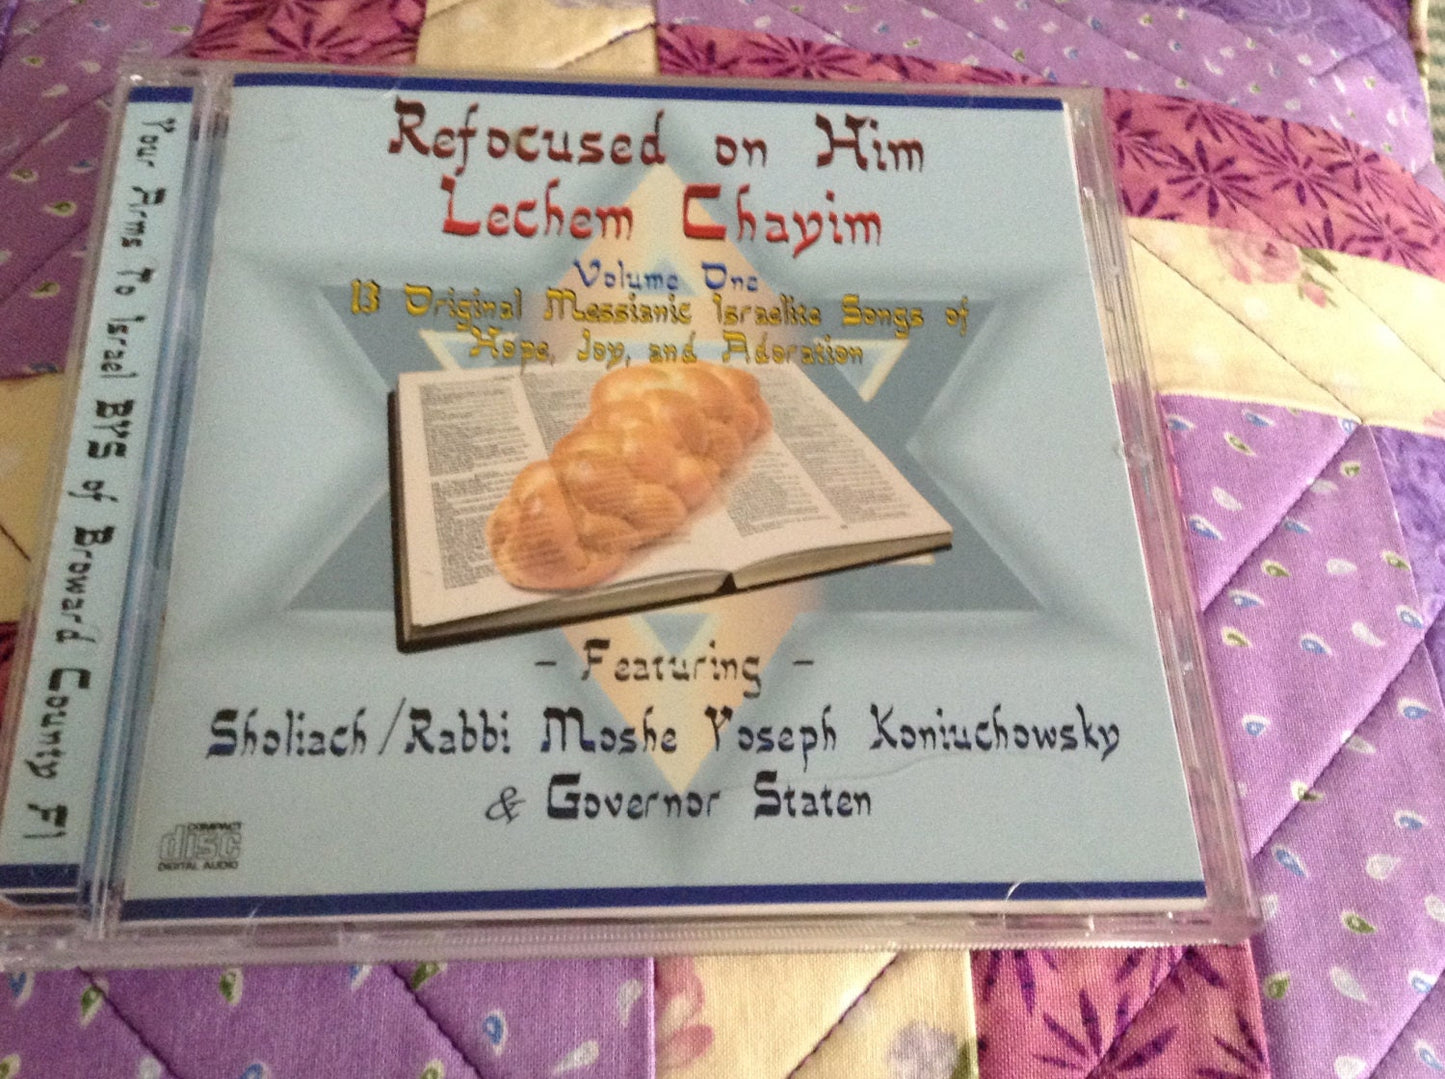 Lechem Chayim-Volume One